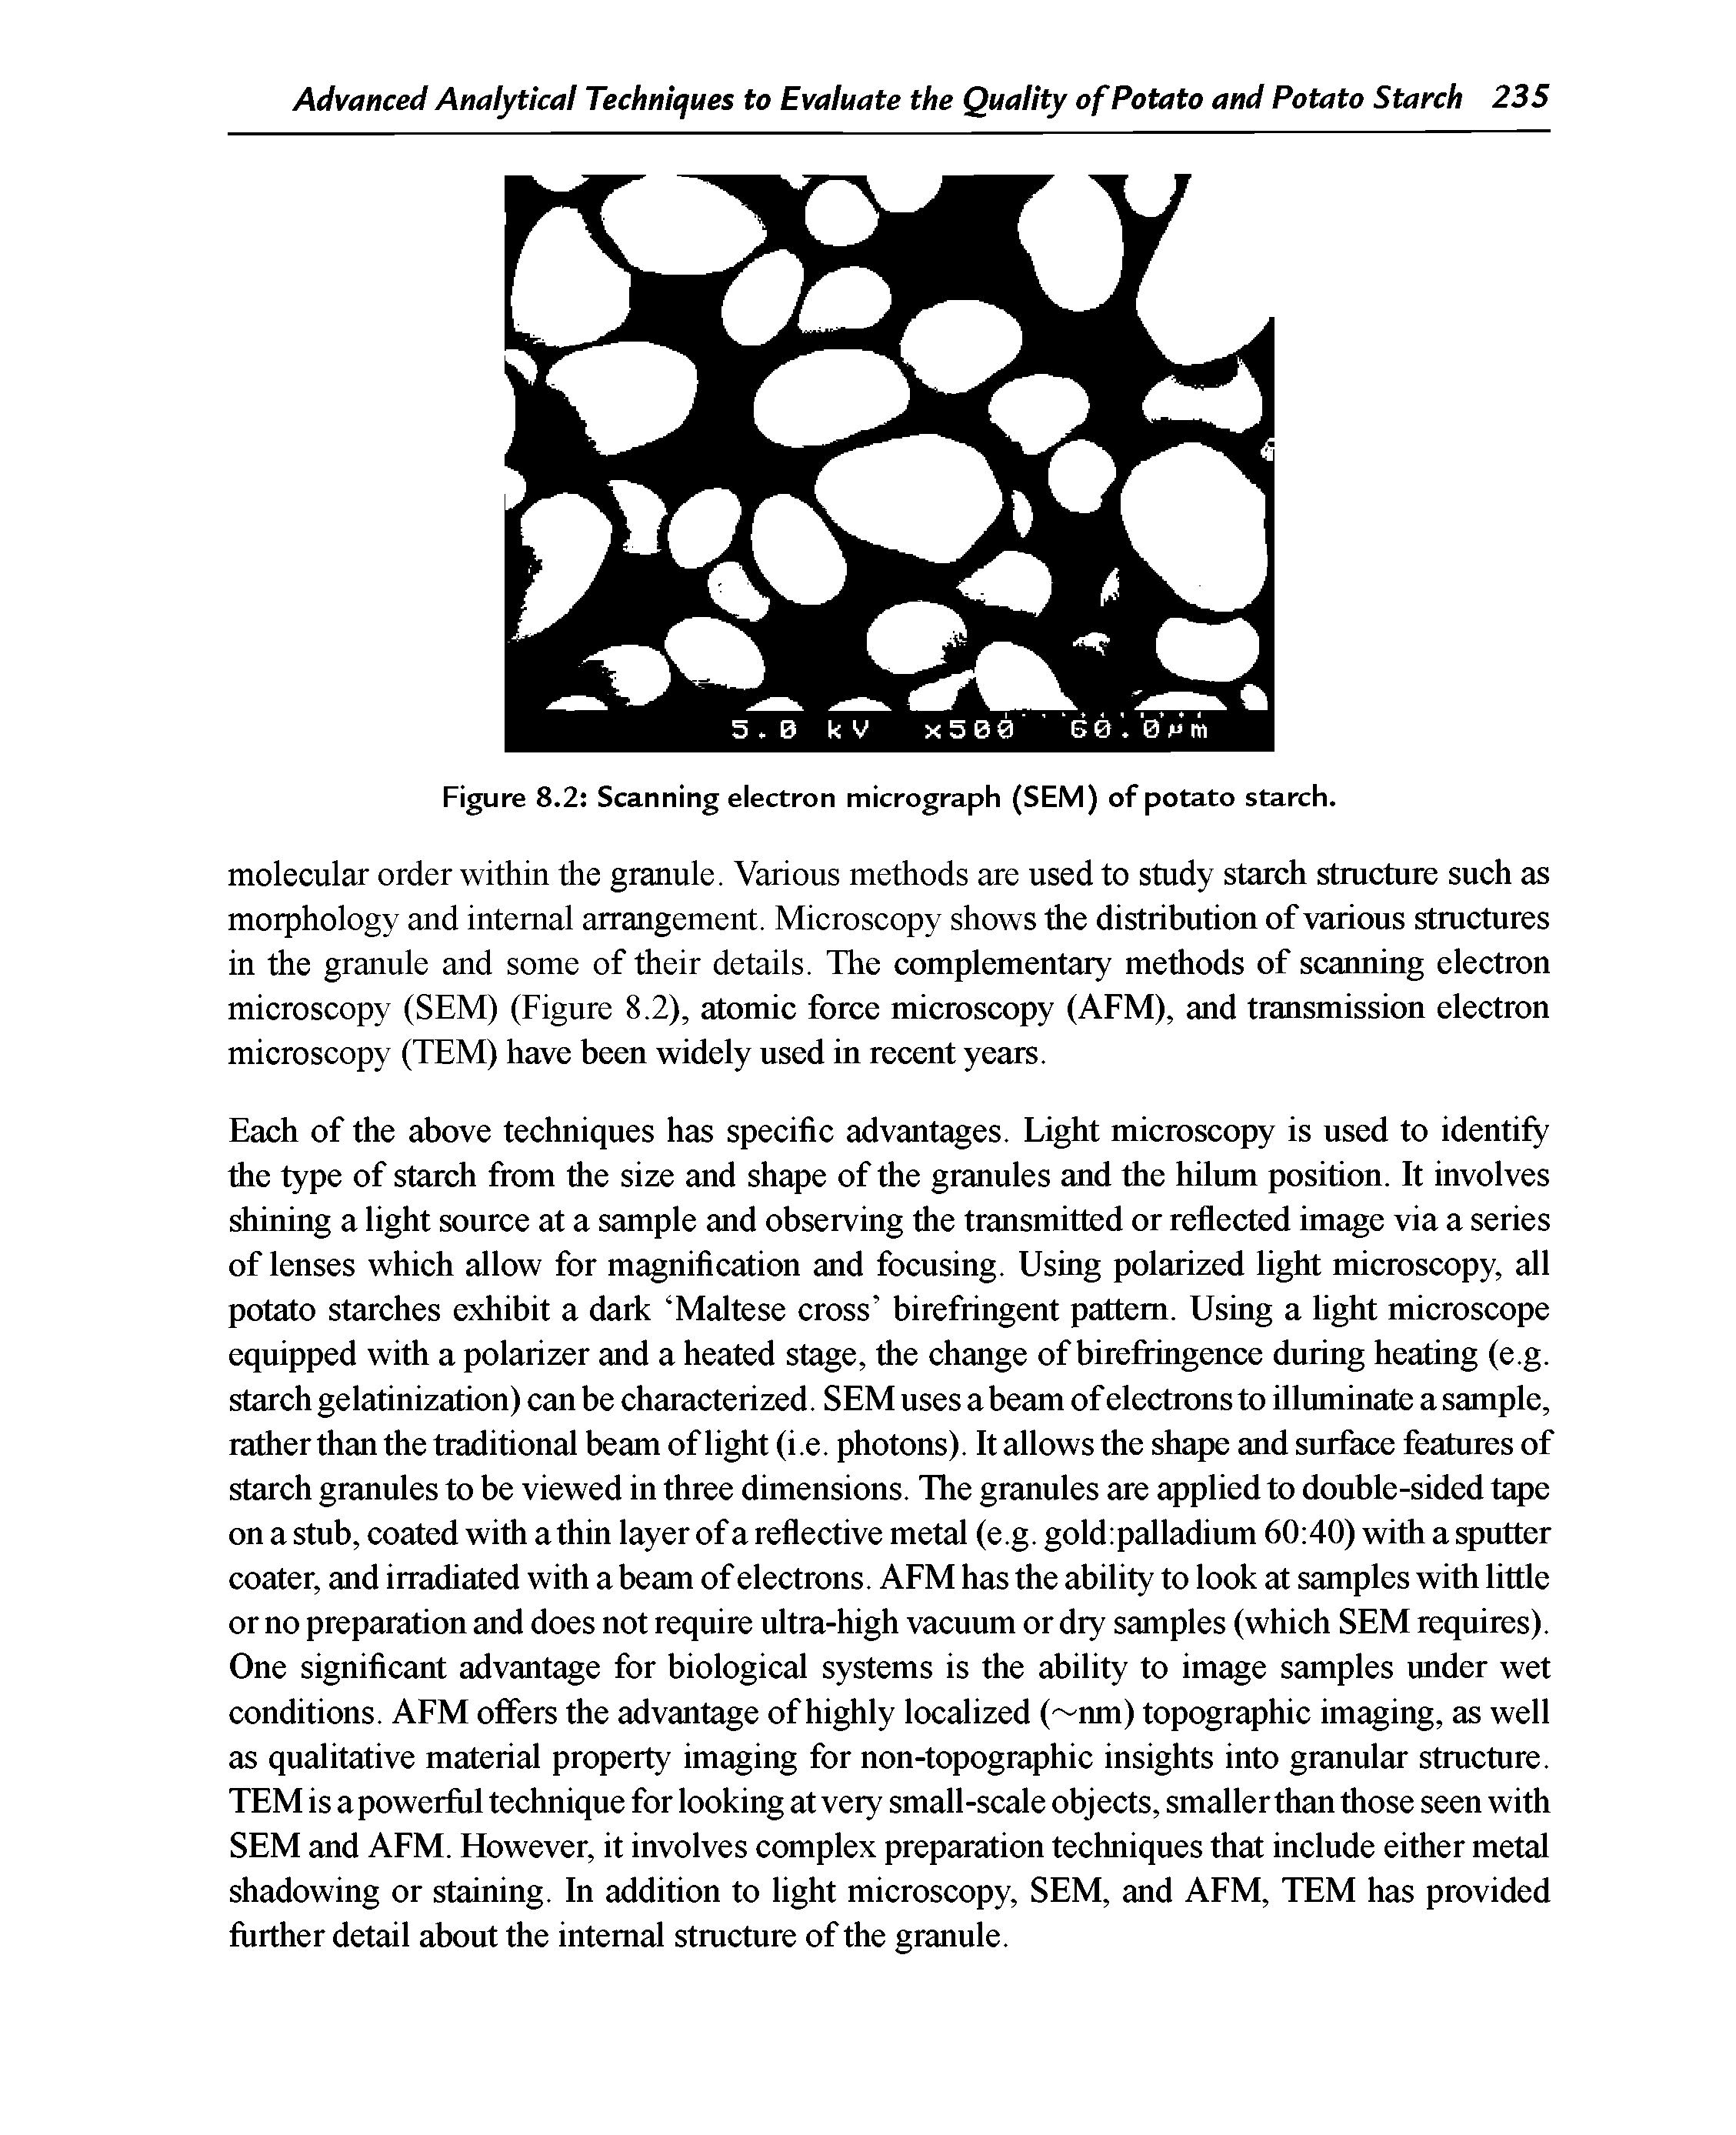 Figure 8.2 Scanning electron micrograph (SEM) of potato starch.